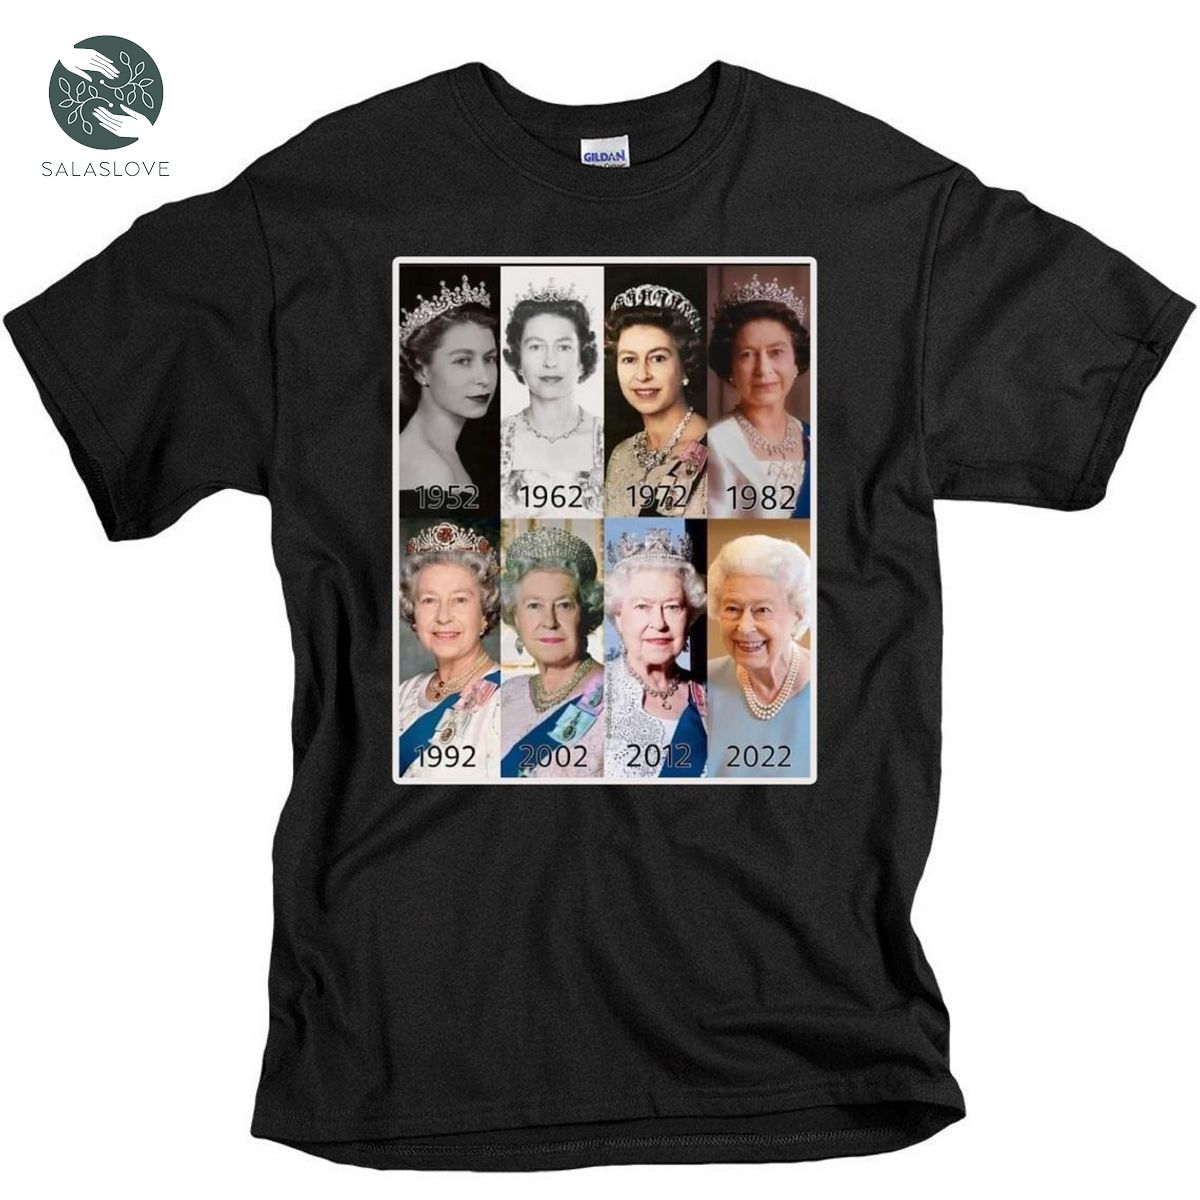 The Queen Elizabeth Royals Family T-shirt